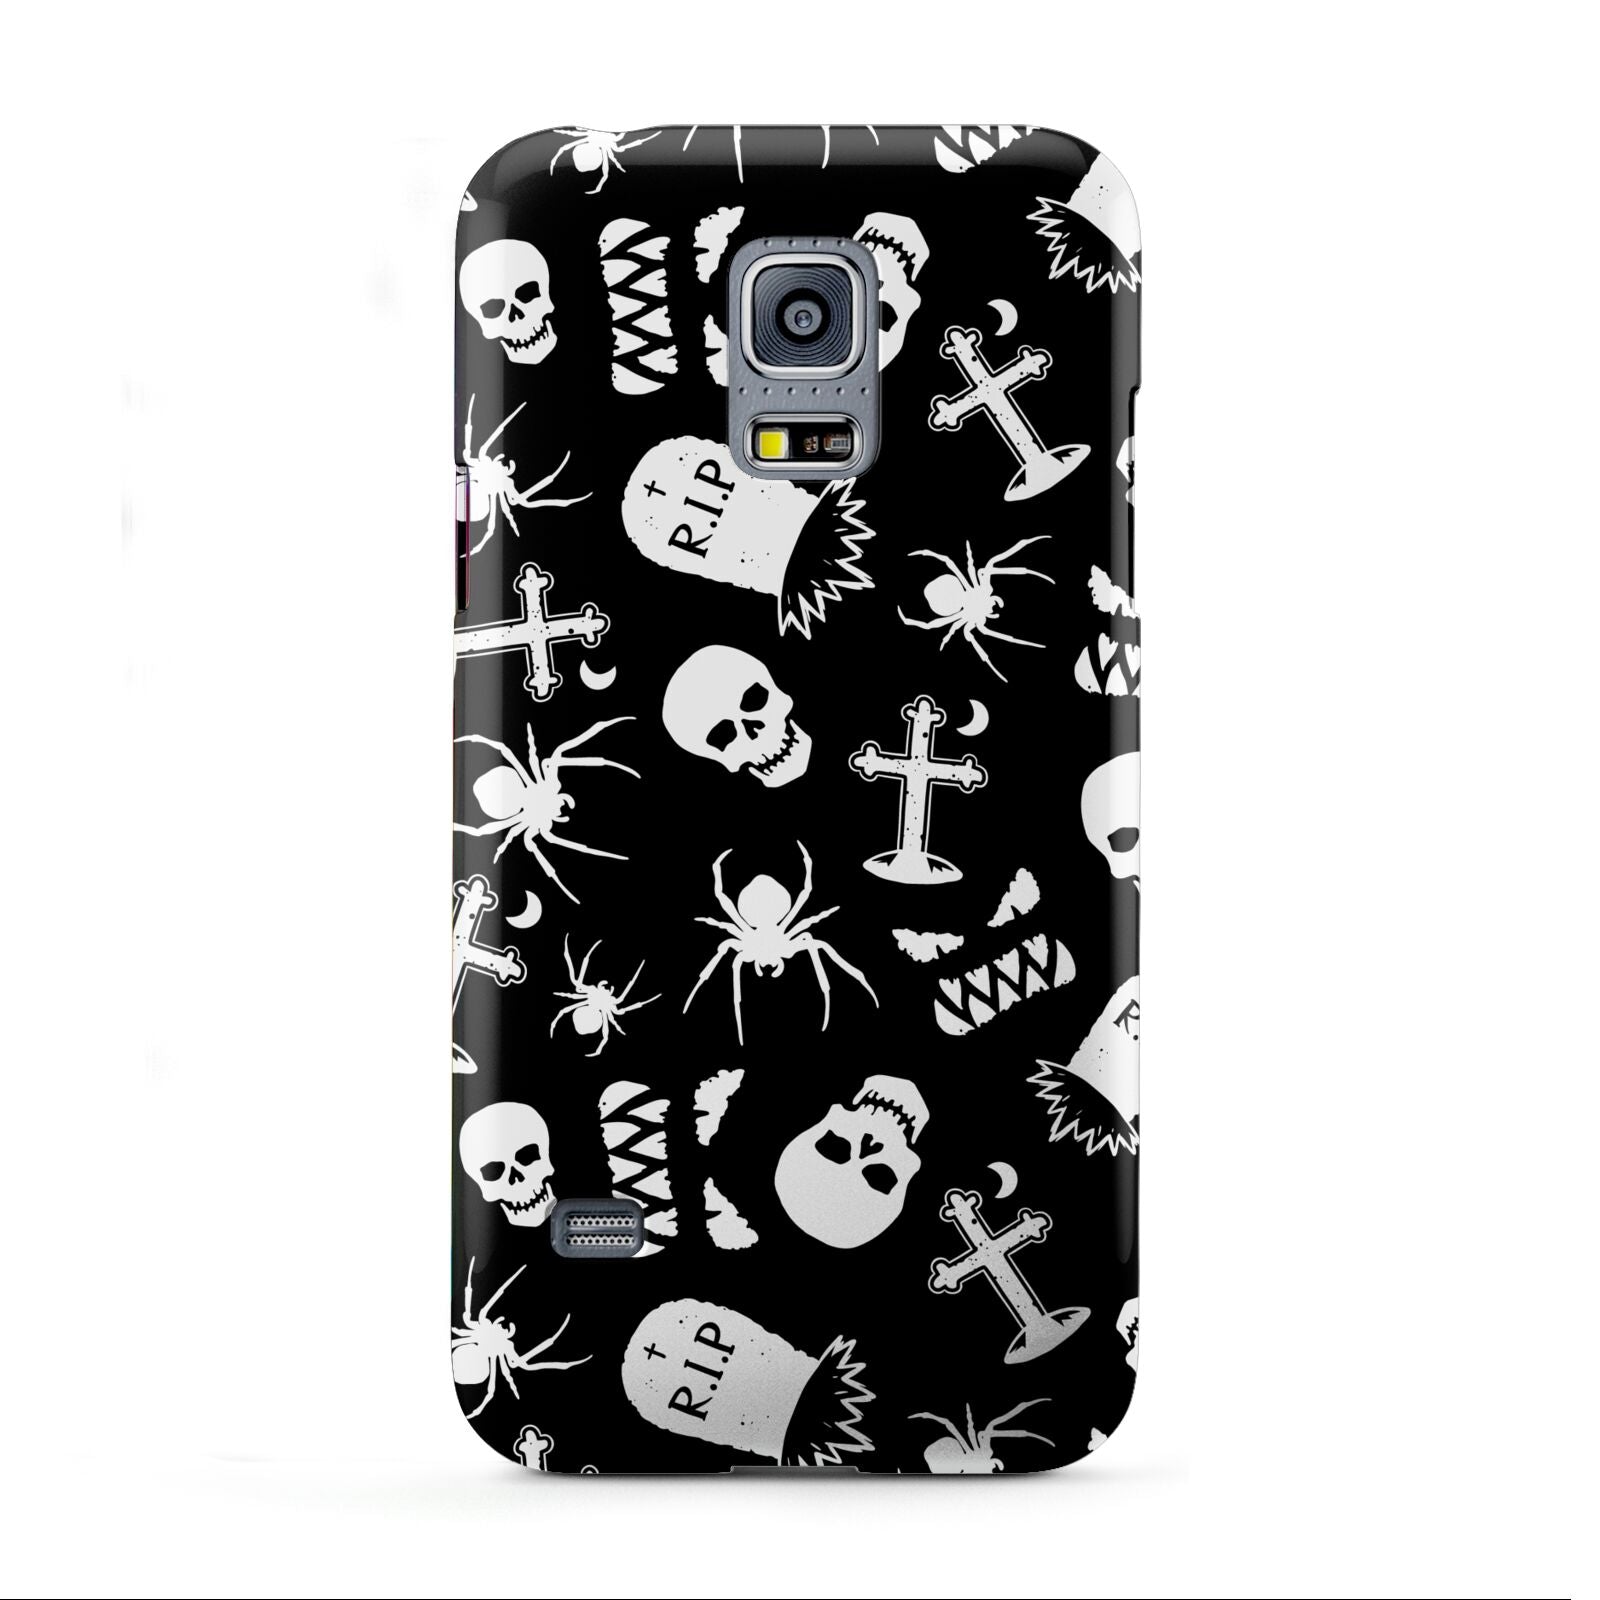 Spooky Illustrations Samsung Galaxy S5 Mini Case